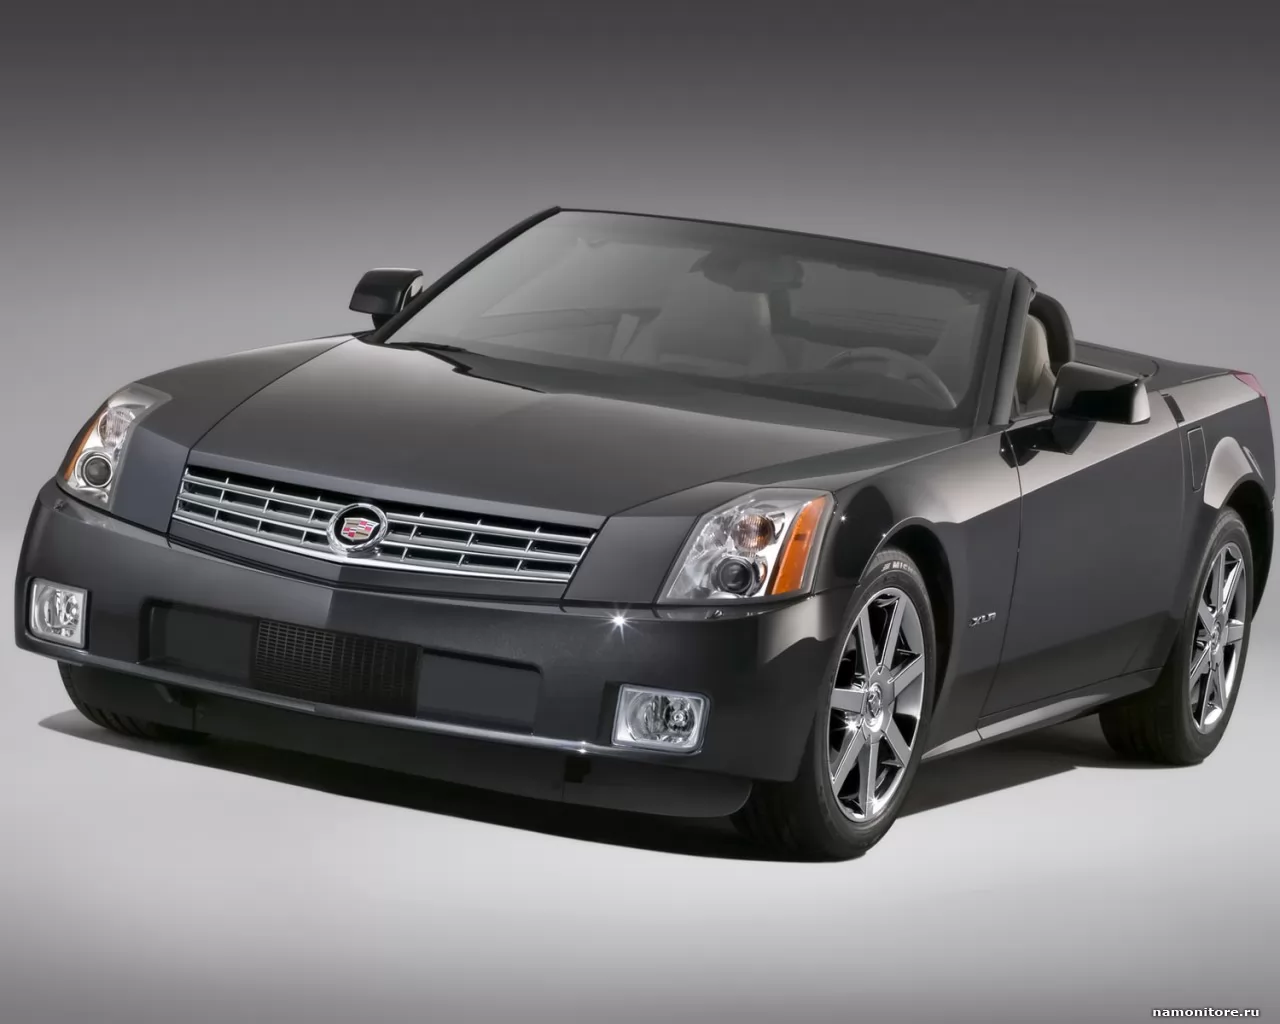 Cadillac Star-Black-Limited-Edition-Xlr, Cadillac, автомобили, кабриолет, серое, техника, чёрное х